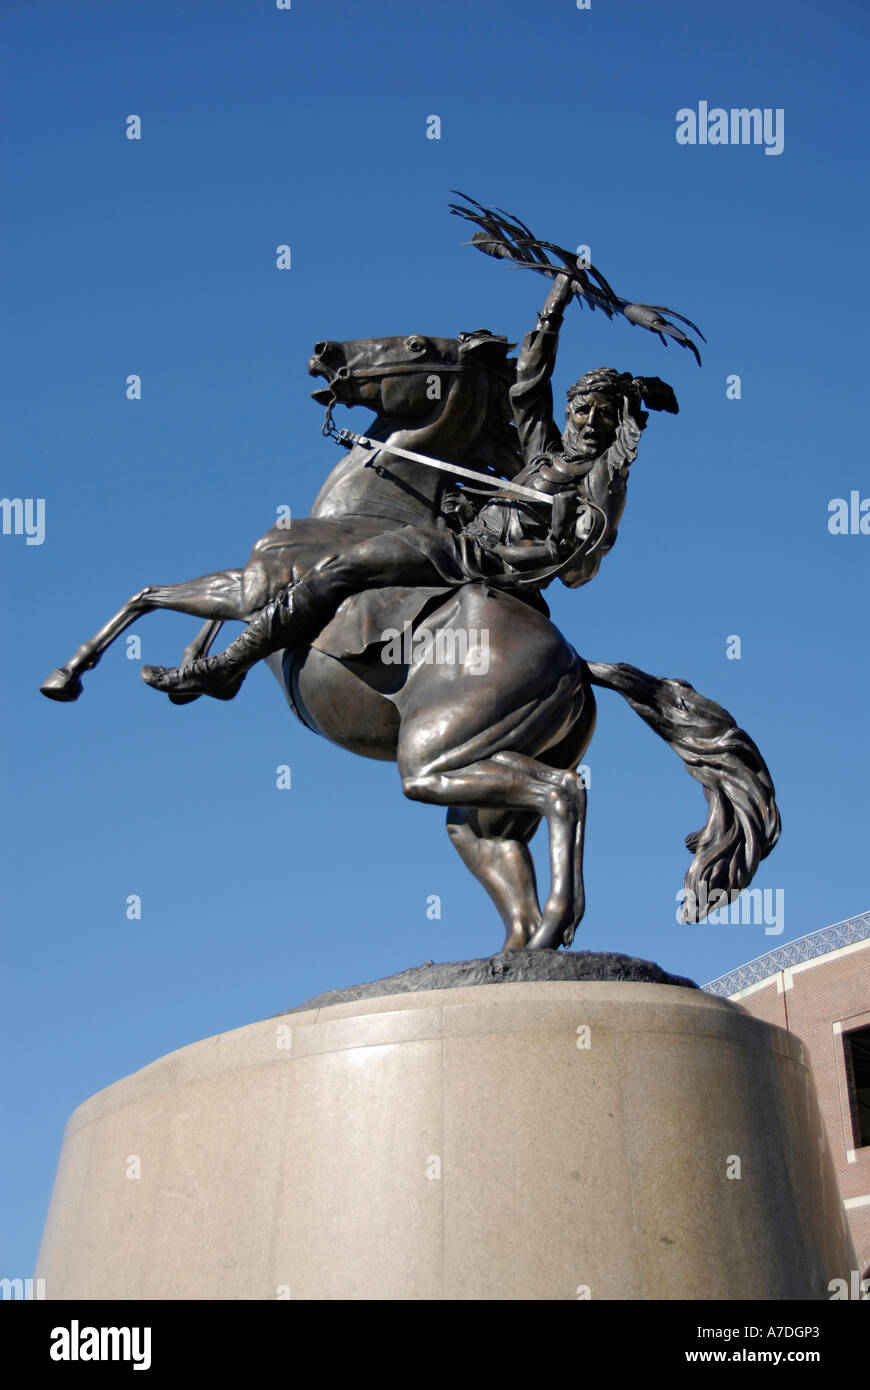 Mascot Statue of Unconquered Seminole Indian on Horse Florida State University Campus Tallahassee Florida FL Seminoles Stock Photo